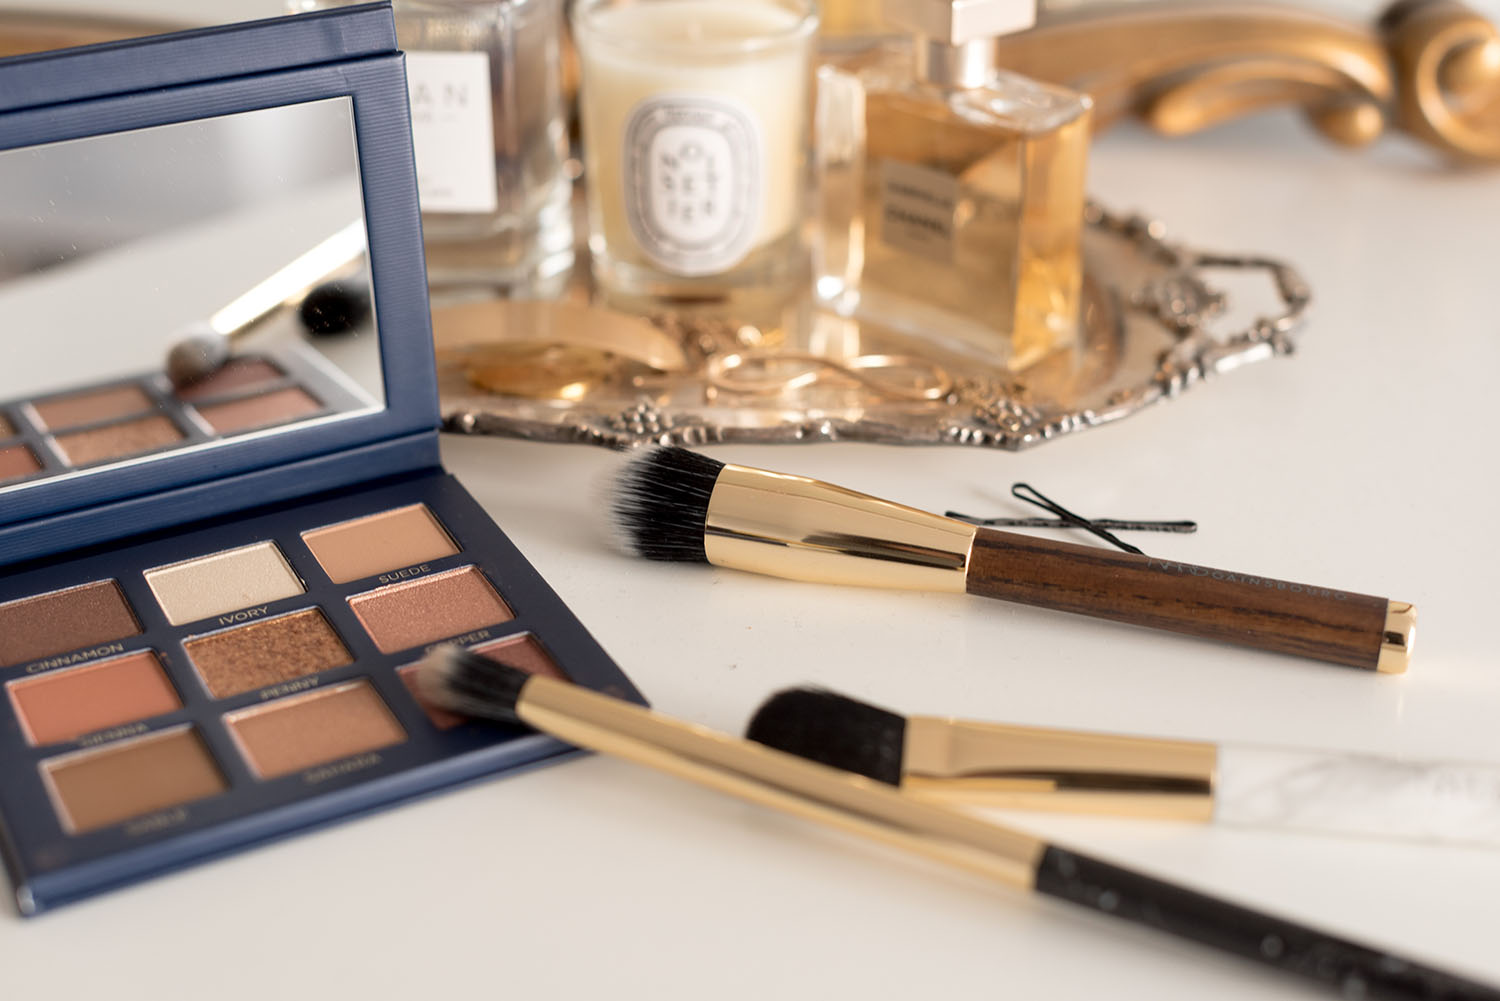 The Beautycounter velvet eyeshadow palette in classic, as captured by top Winnipeg beauty blogger Cee Fardoe of Coco & Vera